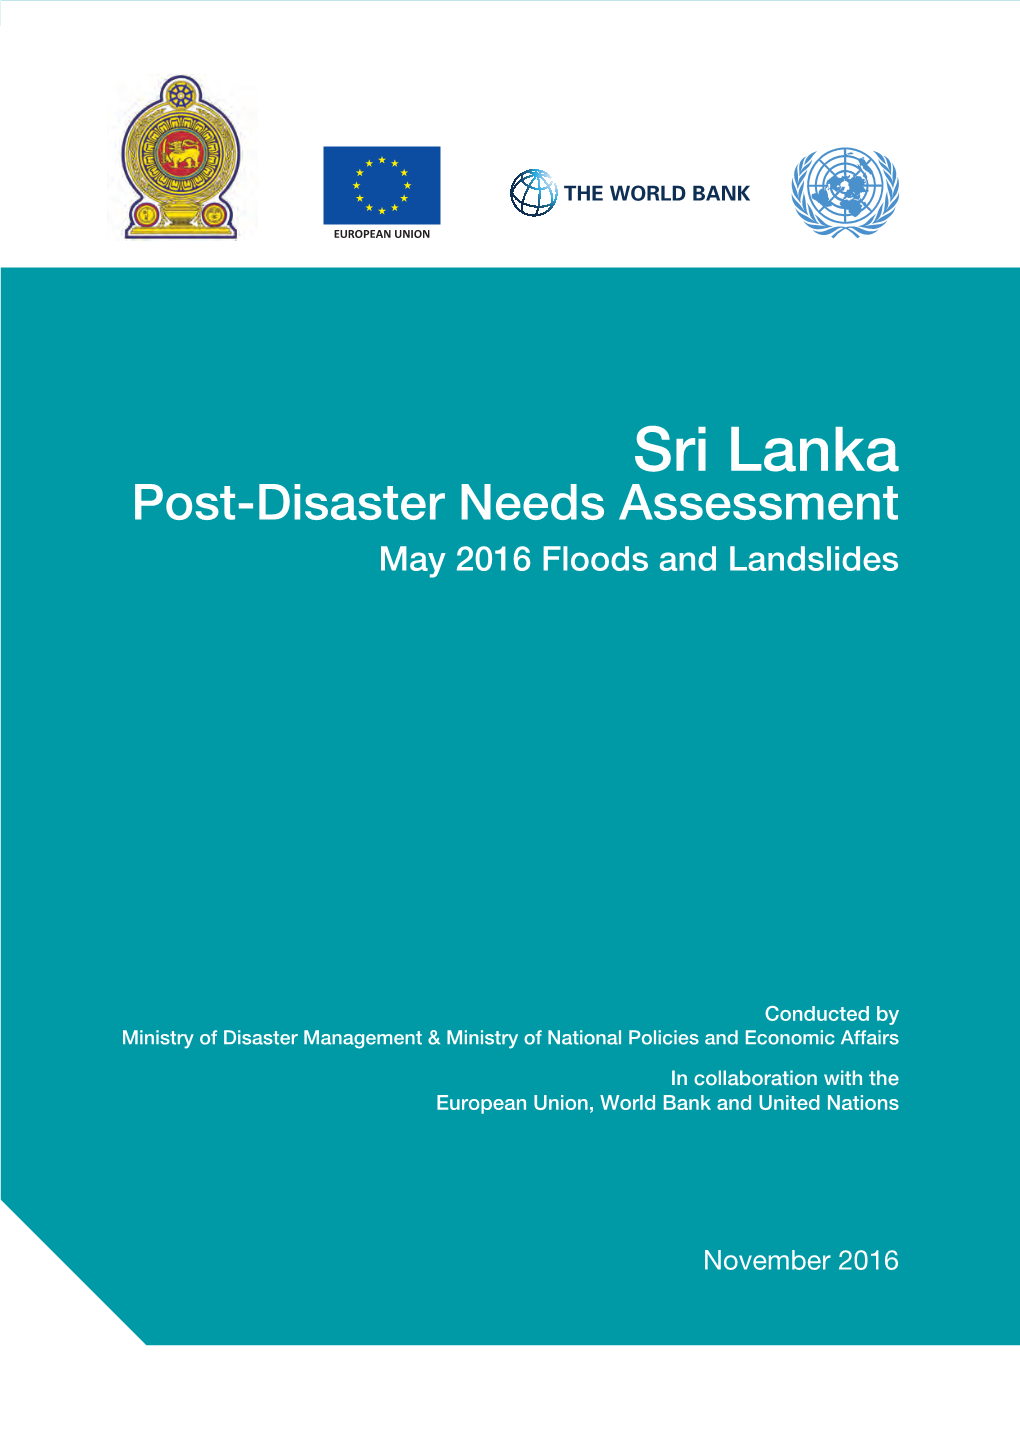 Sri Lanka Post-Disaster Needs Assessment May 2016 Floods and Landslides